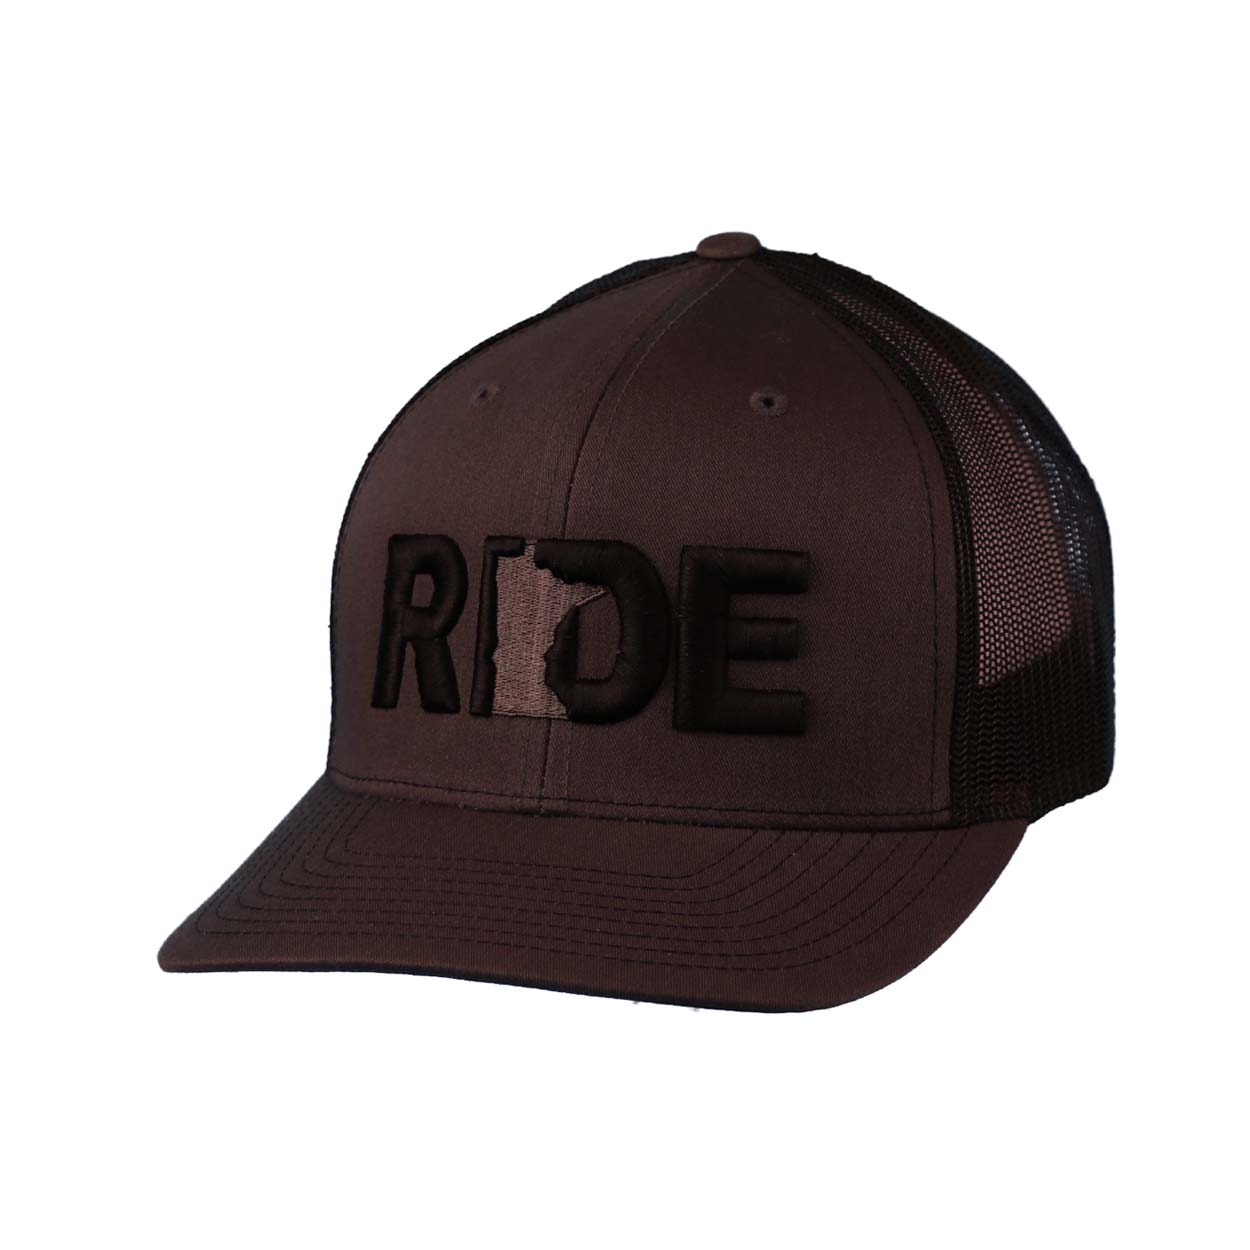 Ride Minnesota Classic Embroidered Snapback Trucker Hat Gray/Black